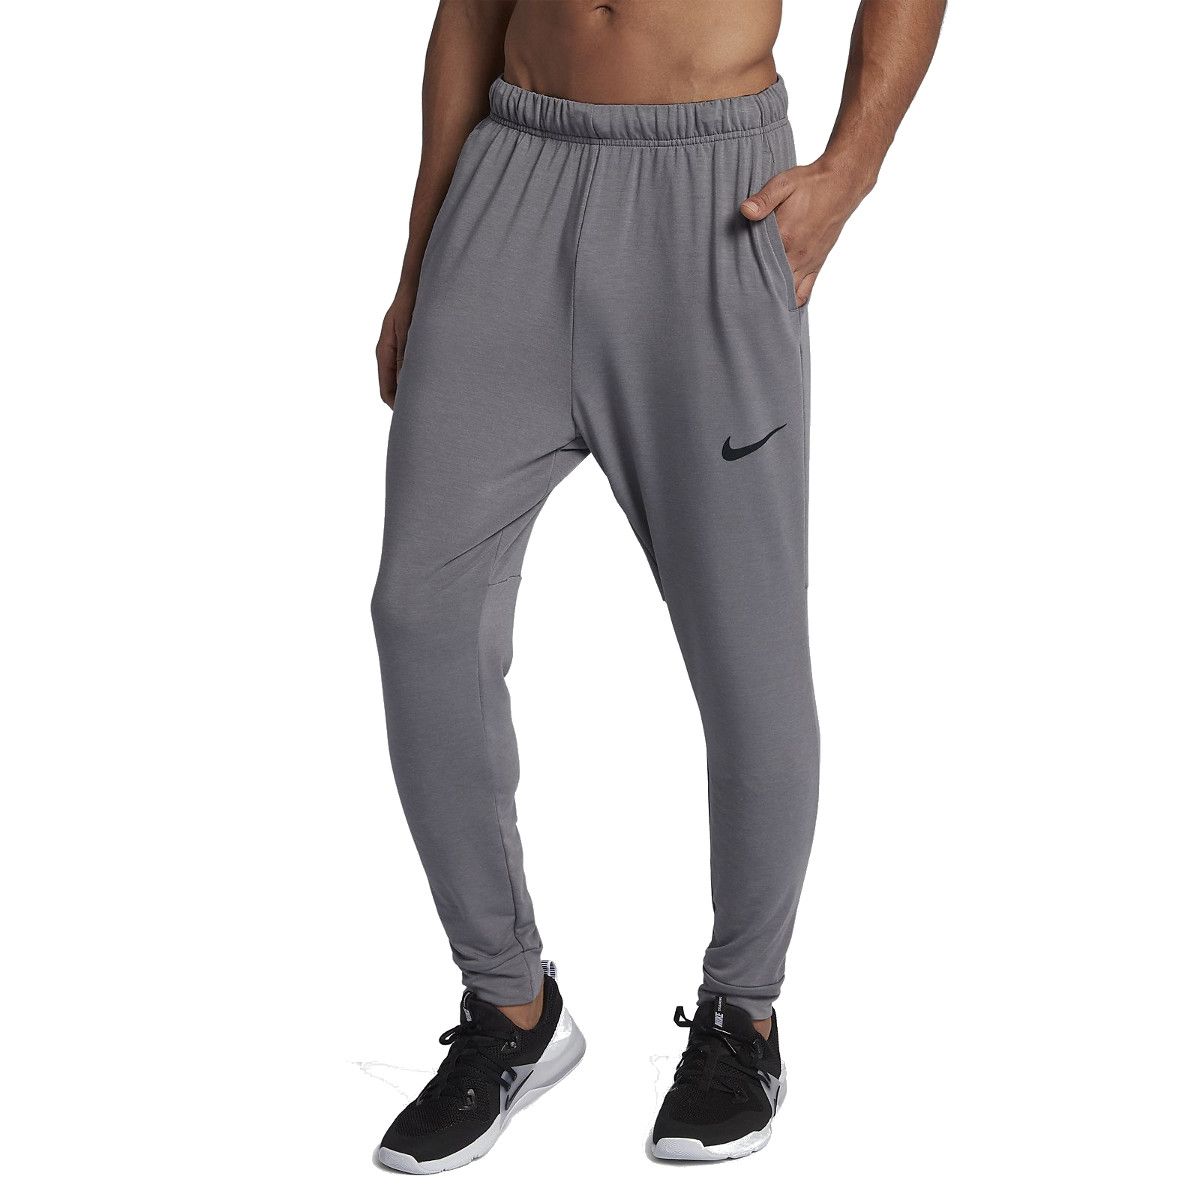 Nike Dry Men's Training Pants 889393-036